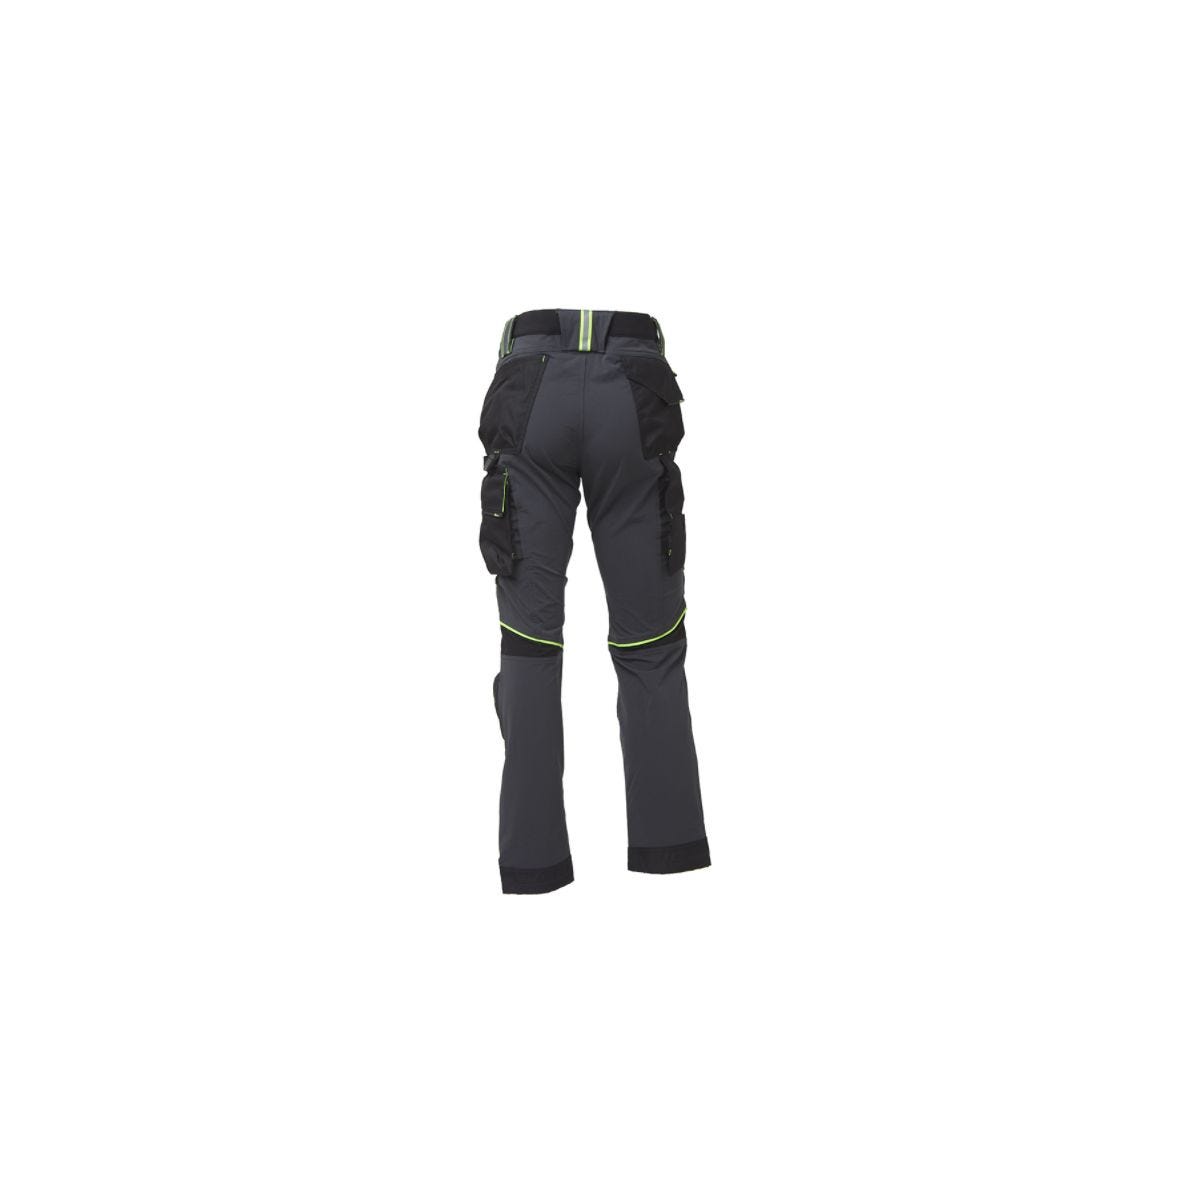 Pantalon ATOM Gris/Vert - U Power - Taille XL 3